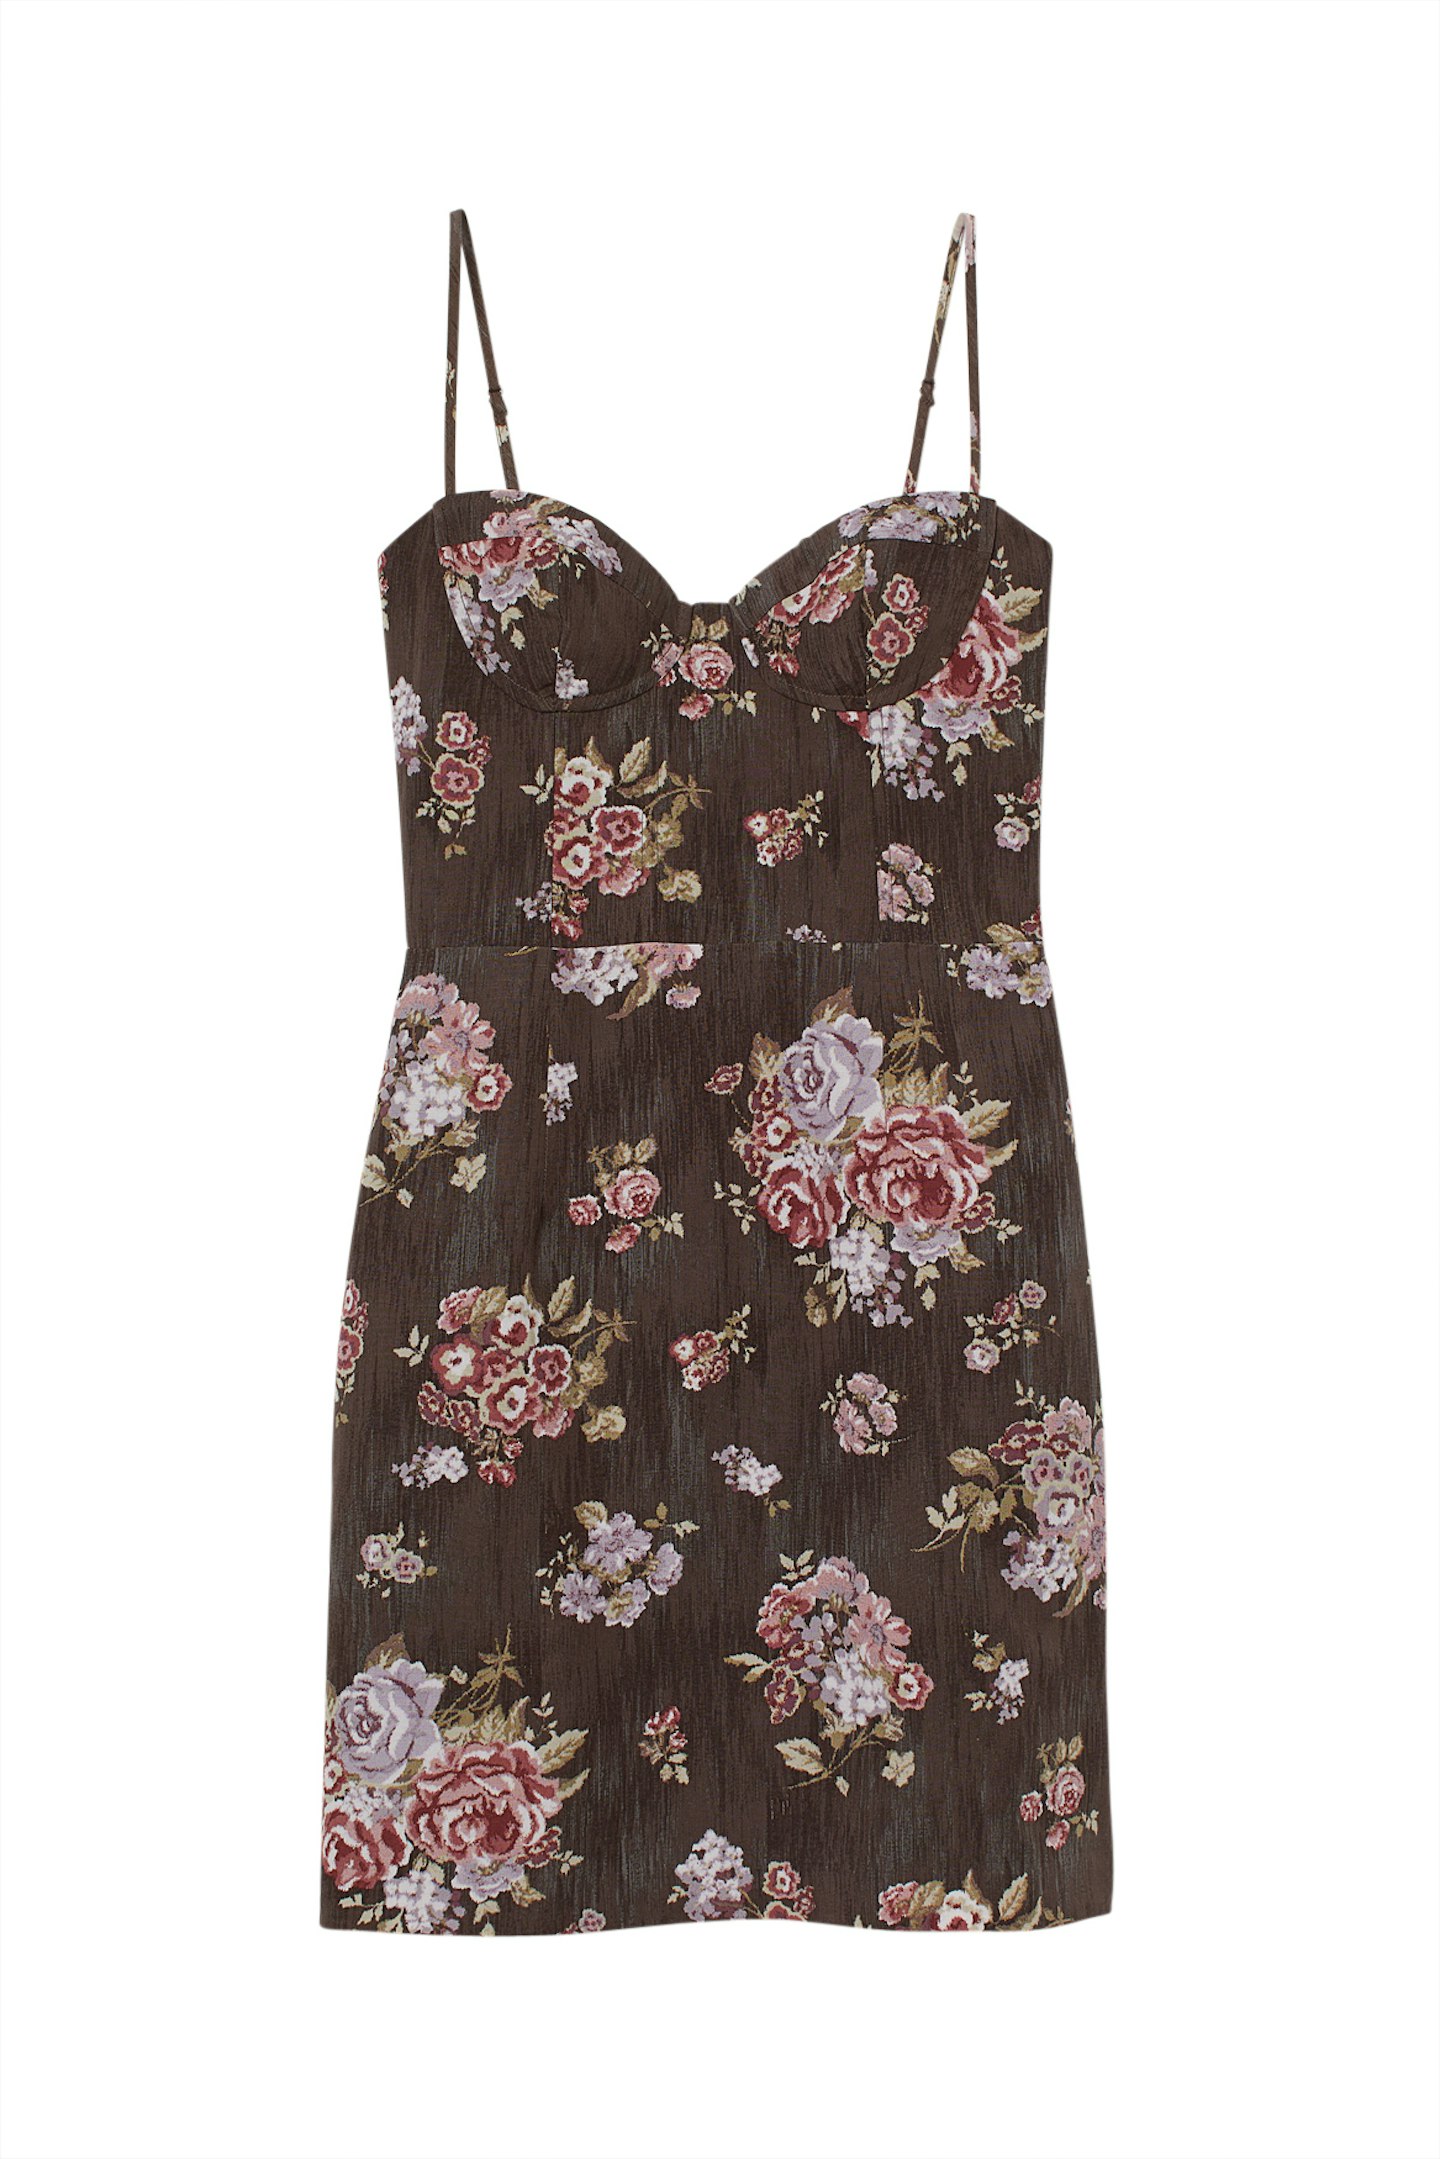 Rose Print Dress, £24.99